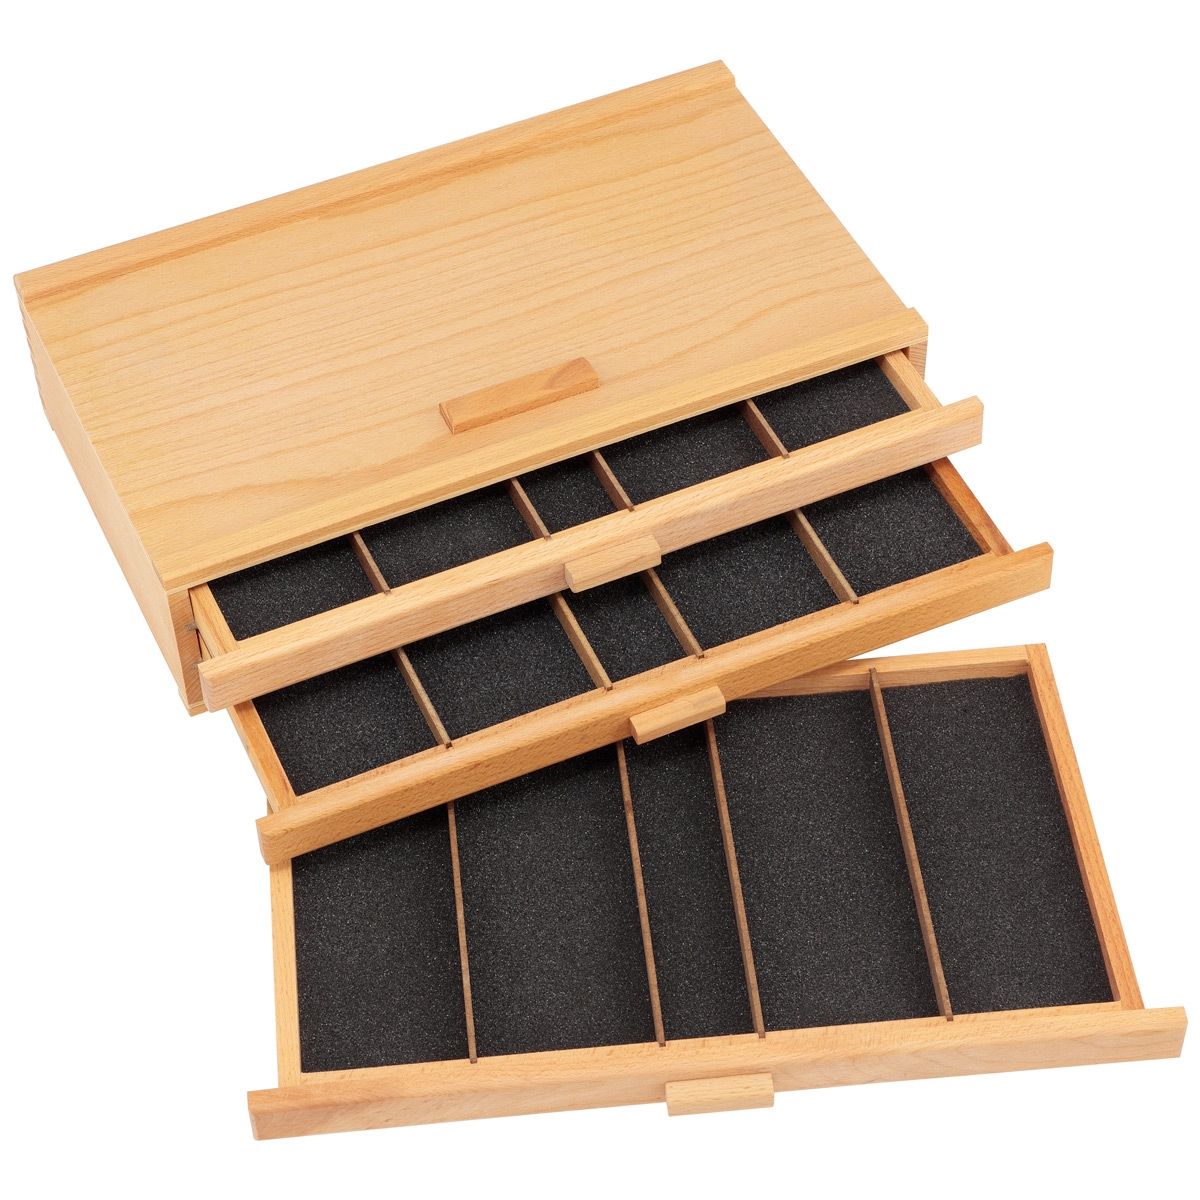 https://www.jerrysartarama.com/media/catalog/product/cache/ecb49a32eeb5603594b082bd5fe65733/3/-/3-drawer-wood-art-supply-storage-box-open-empty-angled-drawer-out.jpg